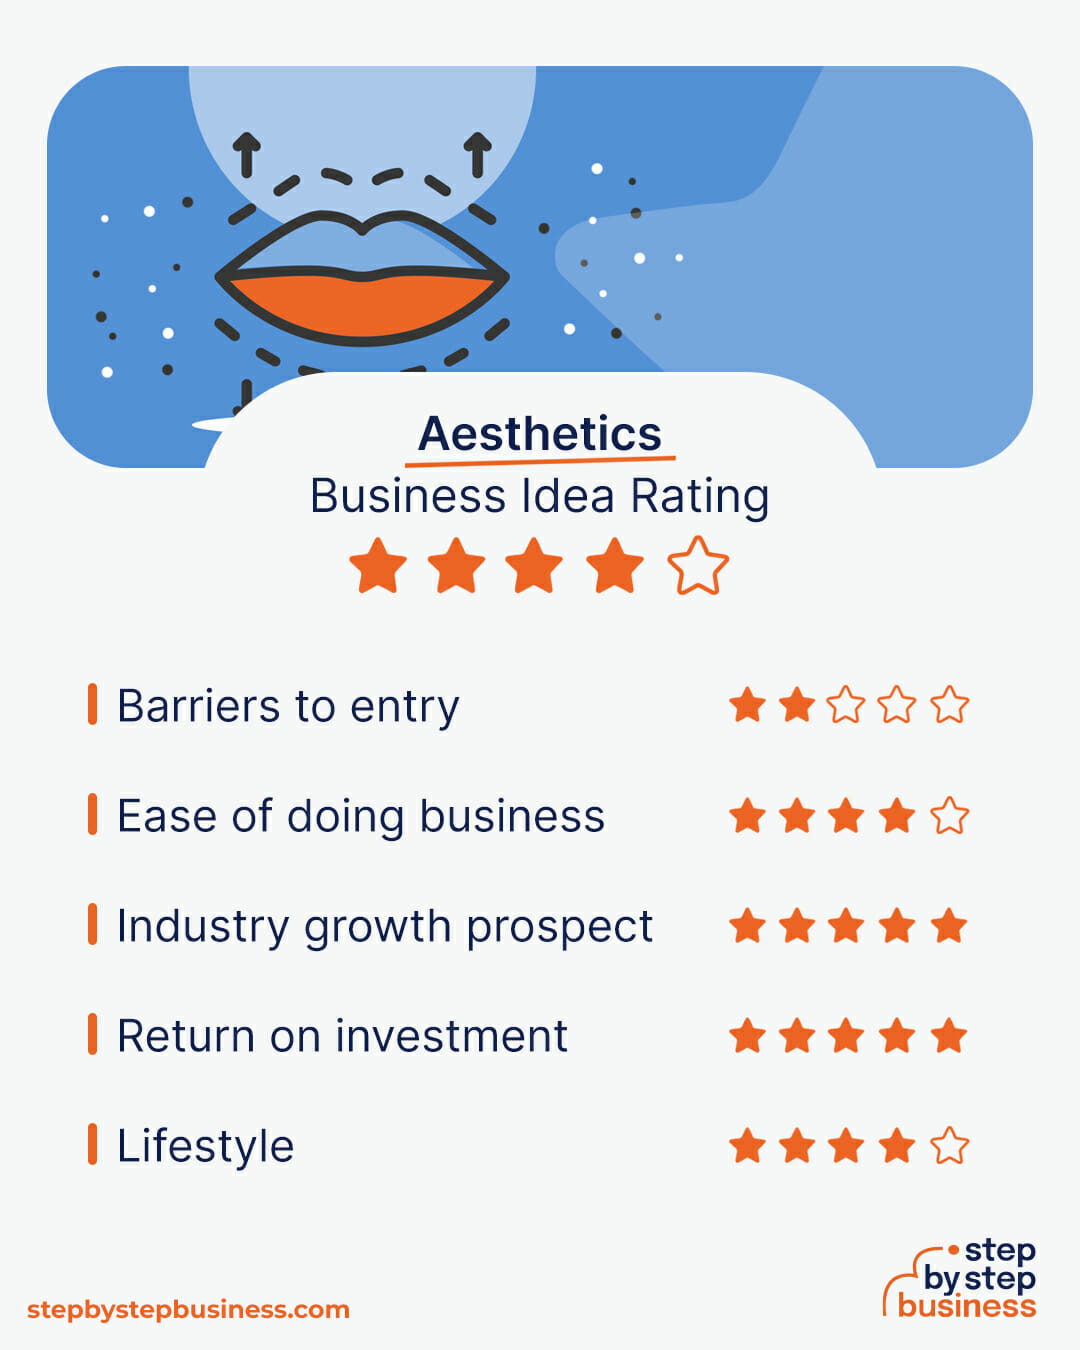 Aesthetics Business idea rating